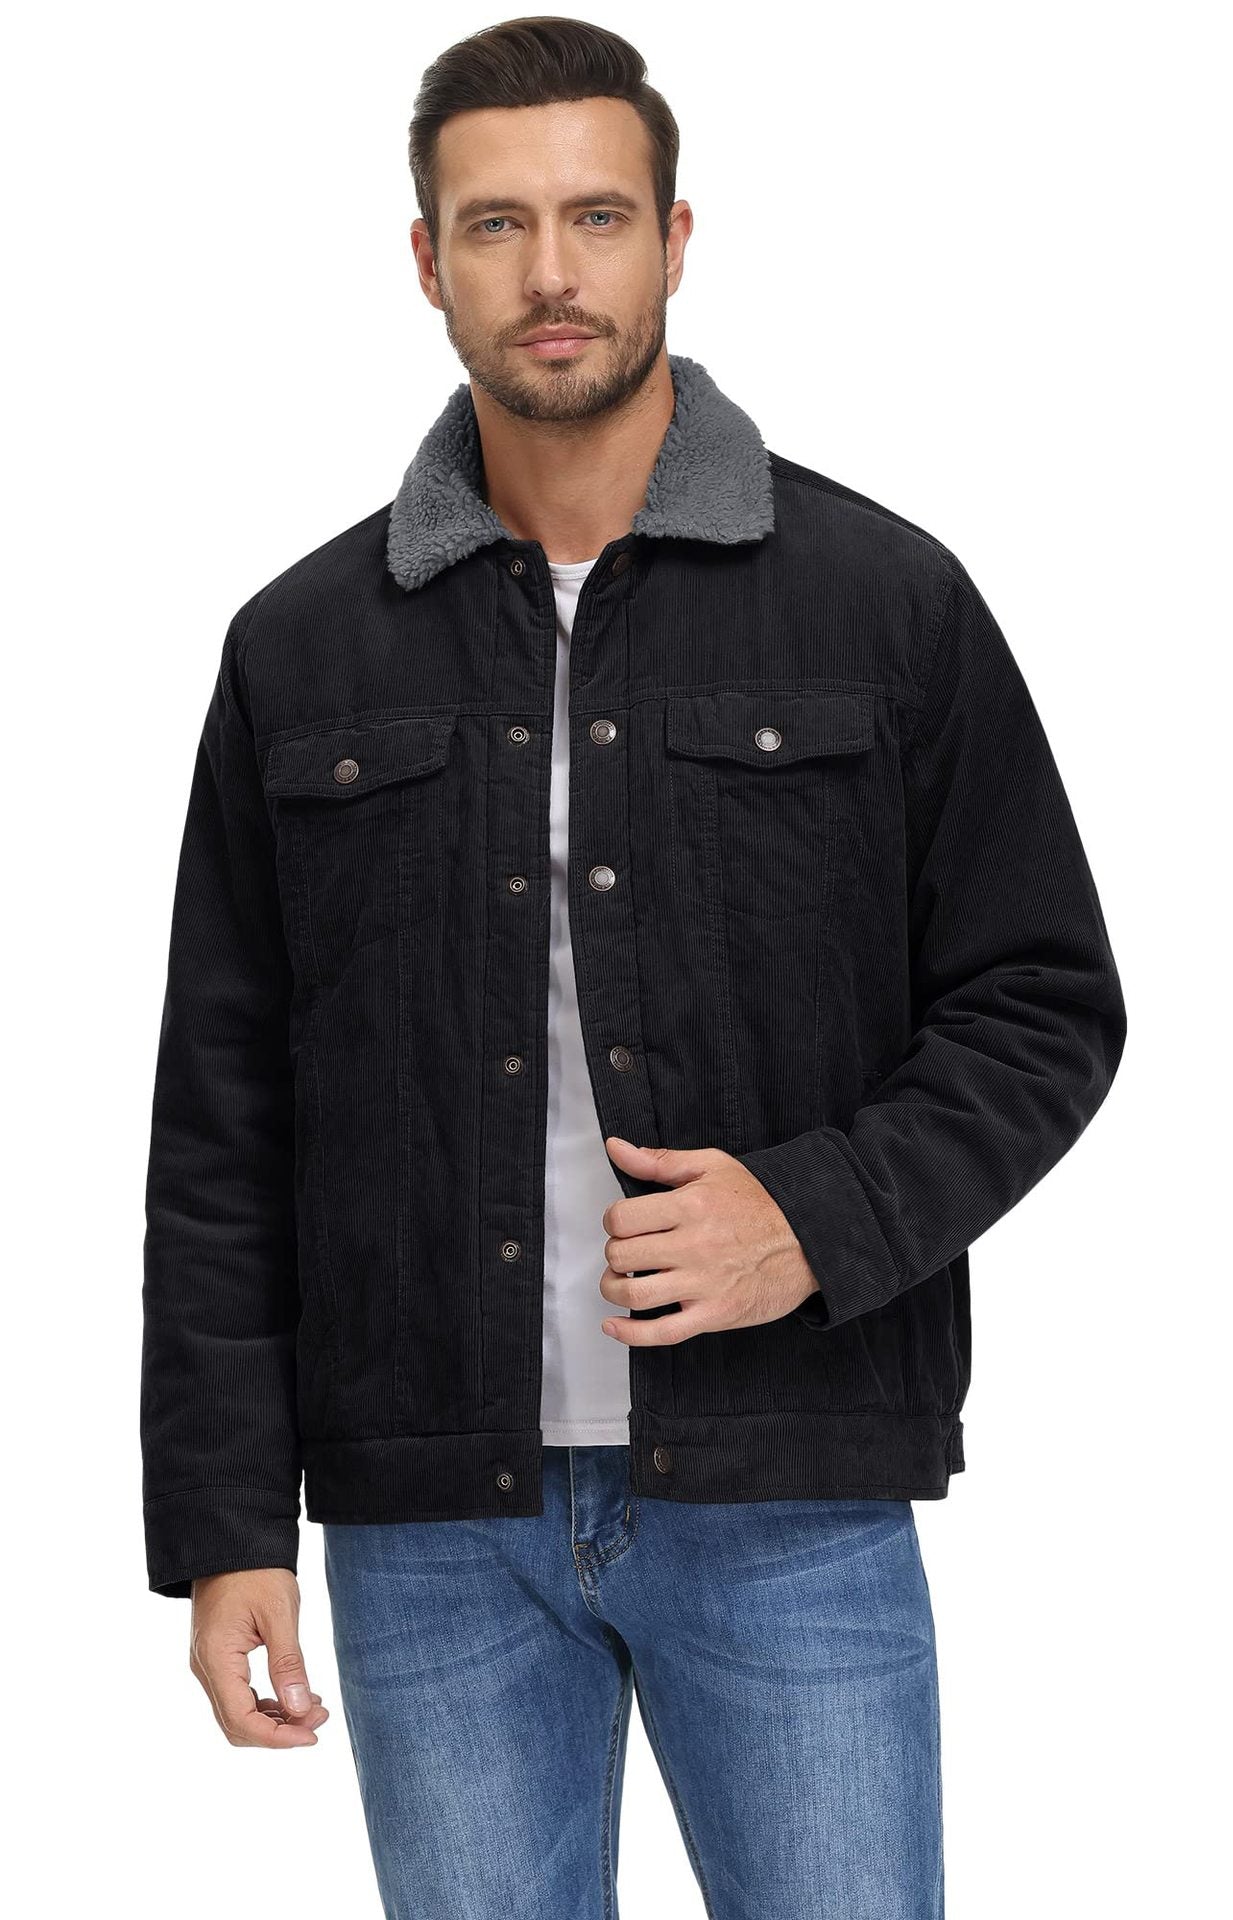 Casual Winter Long Sleeves Velvet Jacket Coats for Men-Coats & Jackets-Free Shipping at meselling99